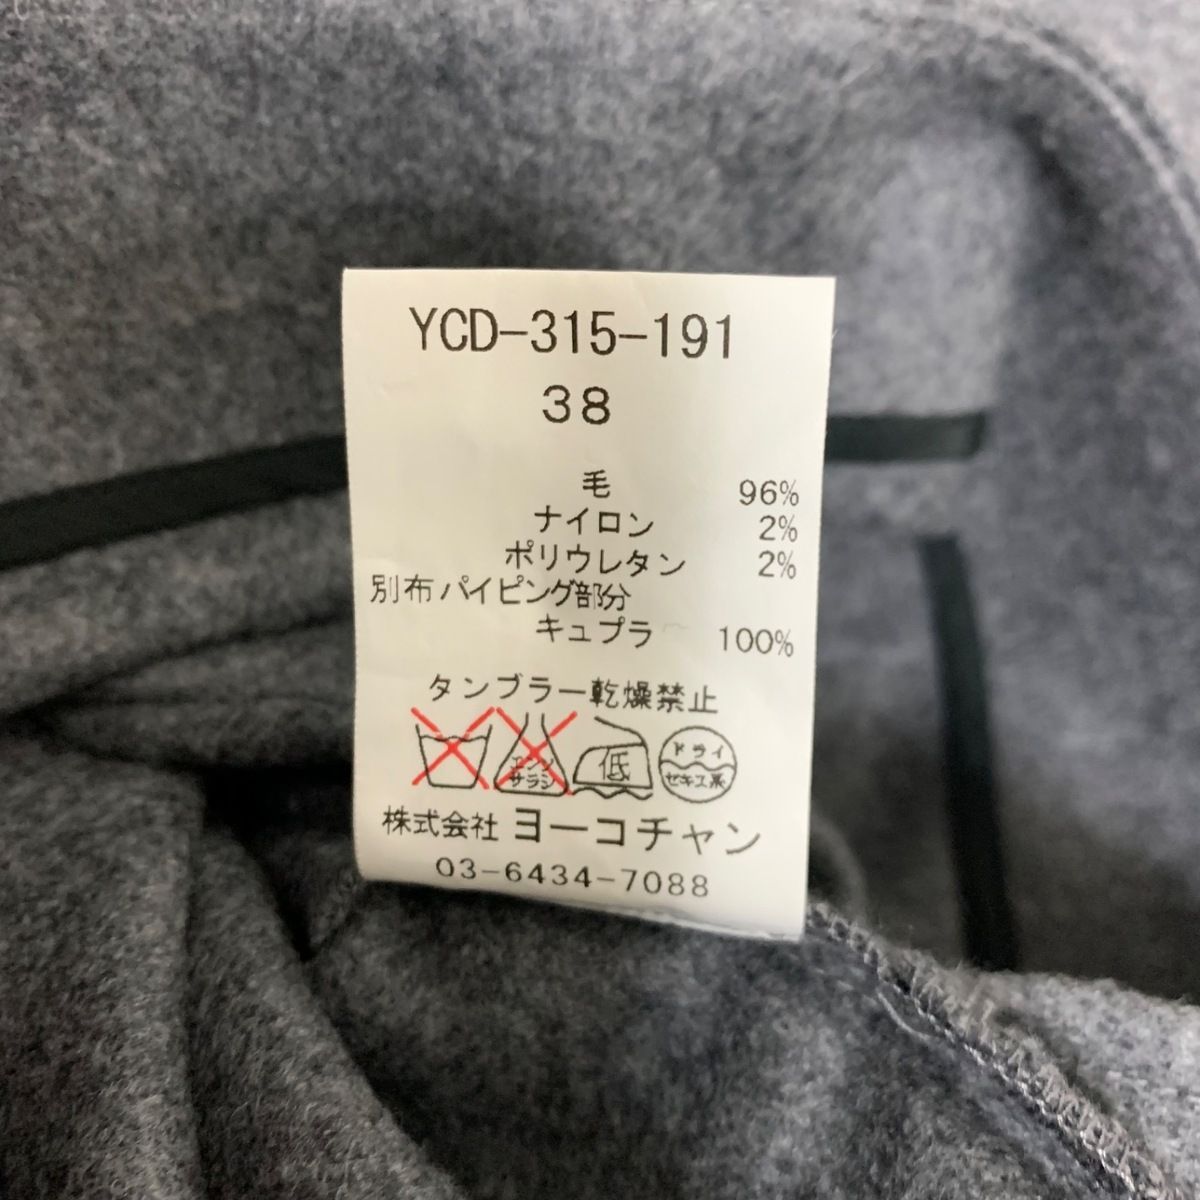 YOKO CHAN(ヨーコ チャン) ワンピース サイズ38 M レディース美品 ...